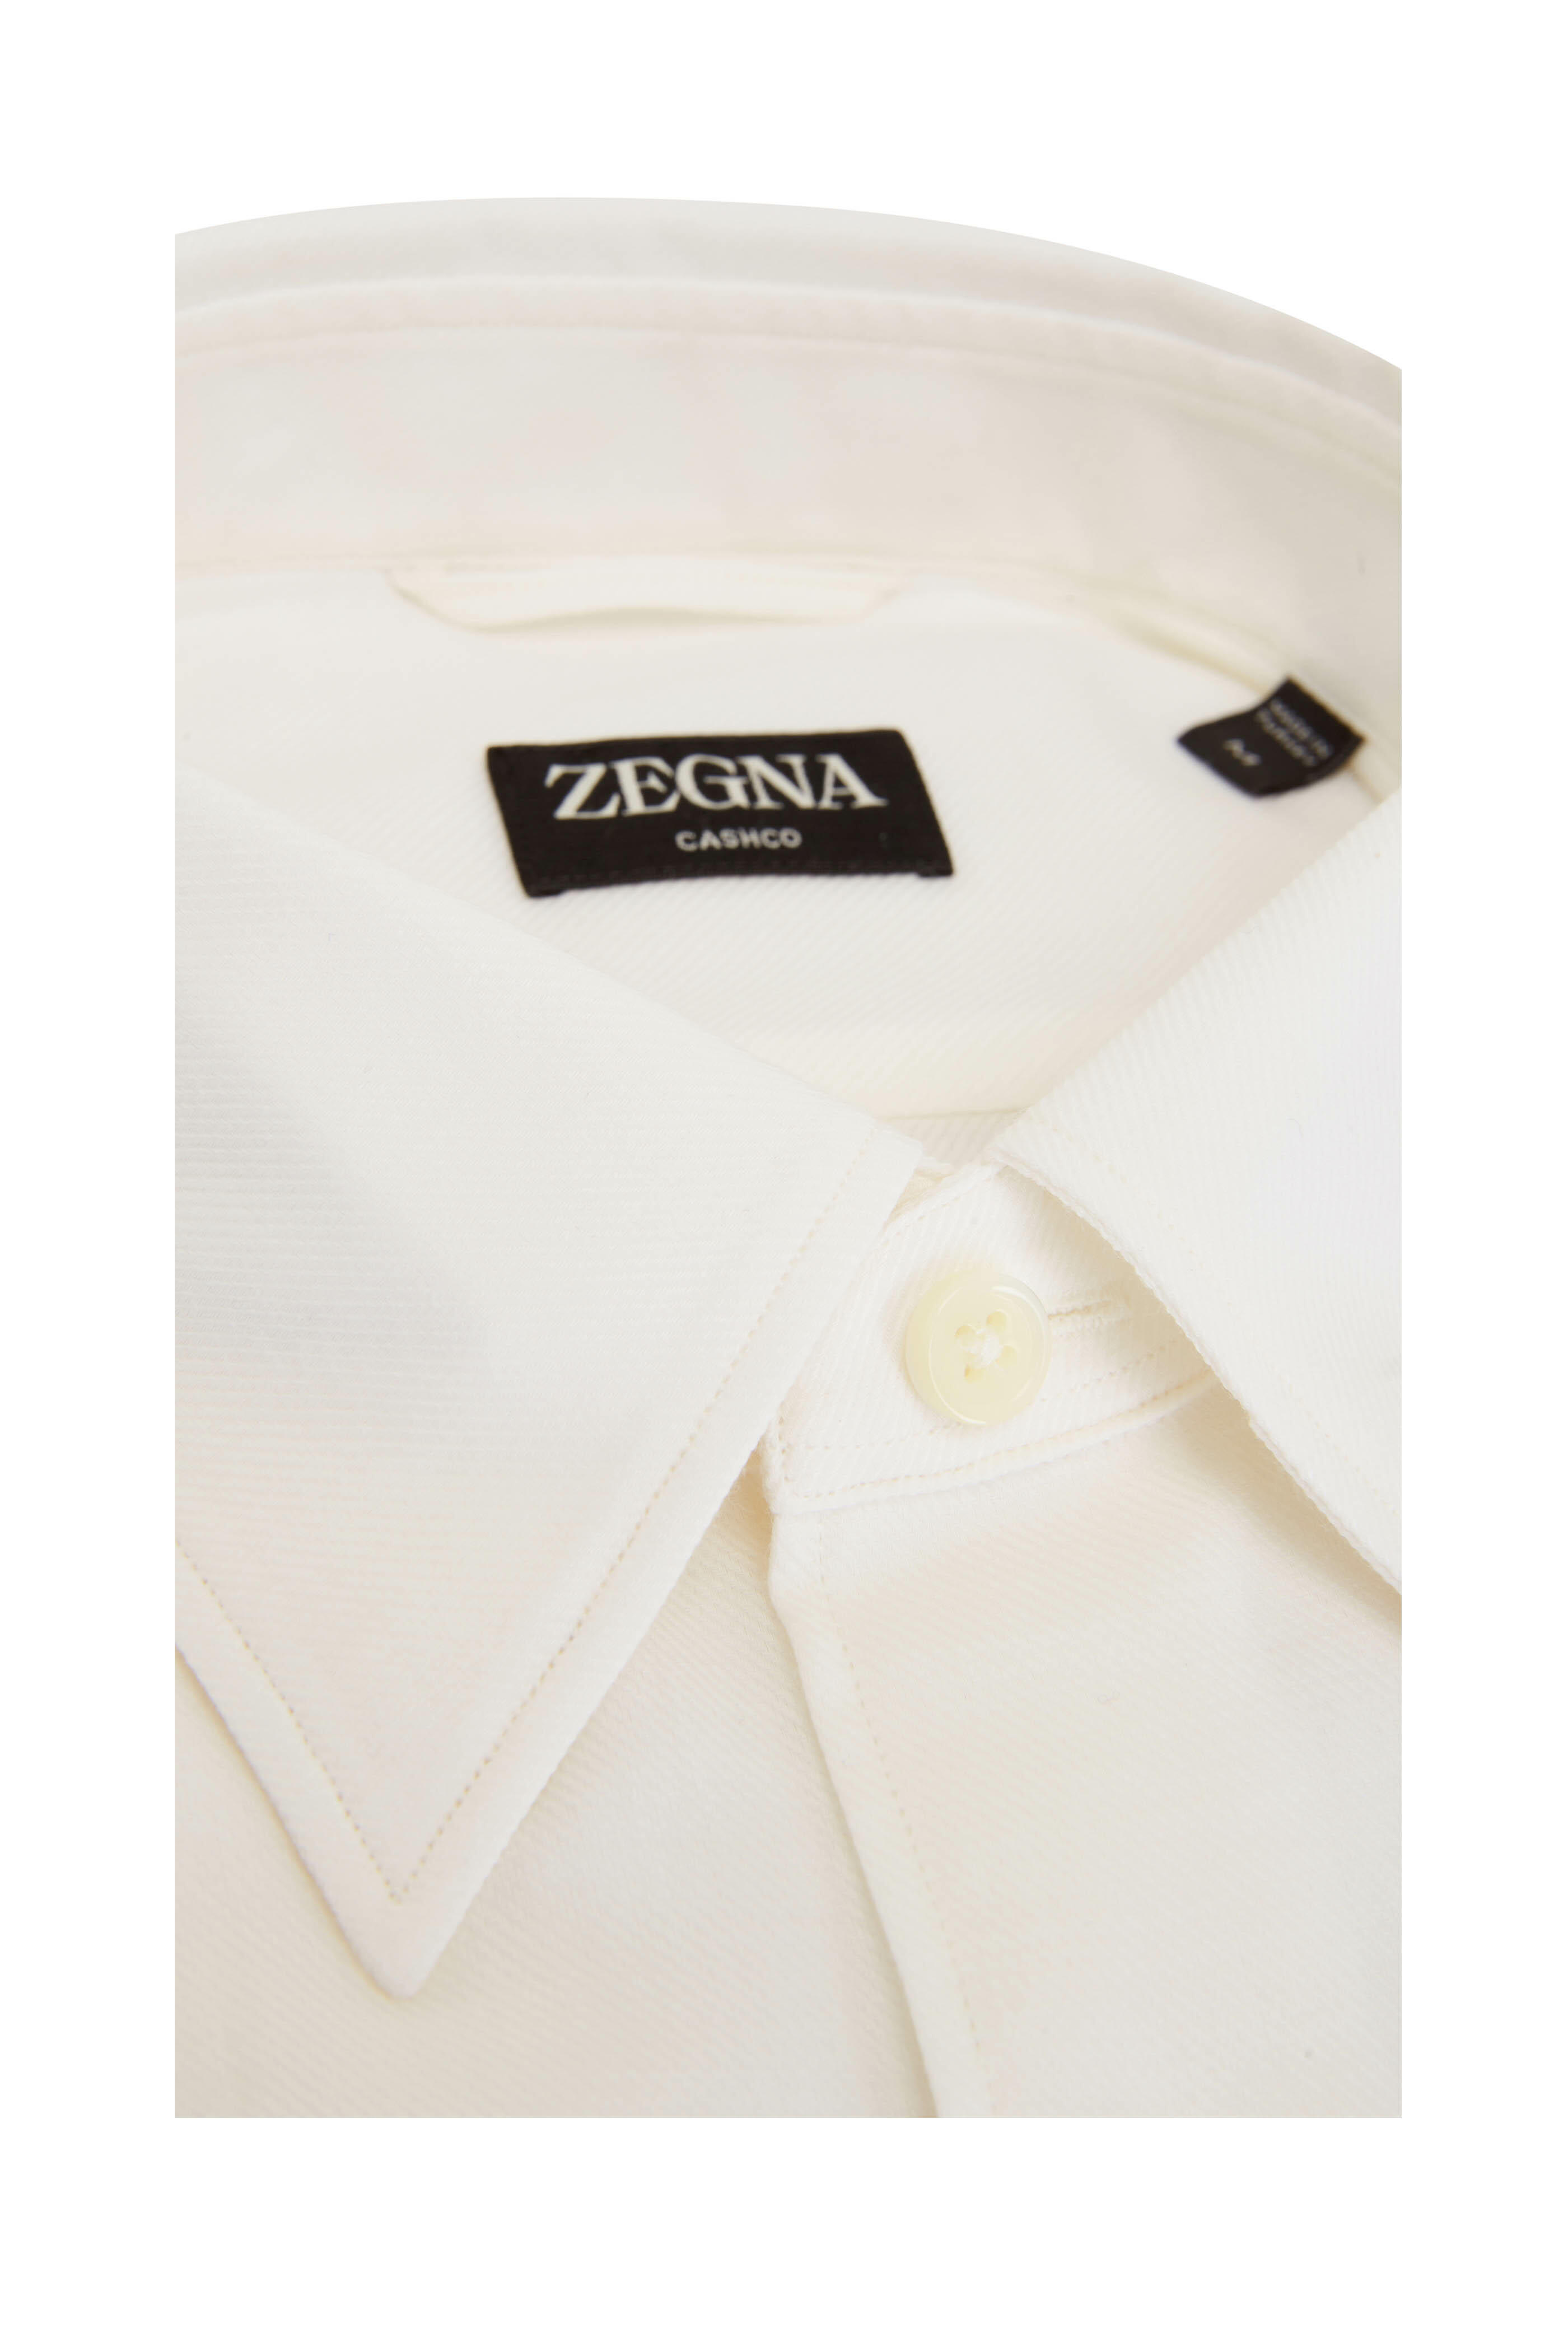 Zegna - Cream CashCo Sport Shirt | Mitchell Stores